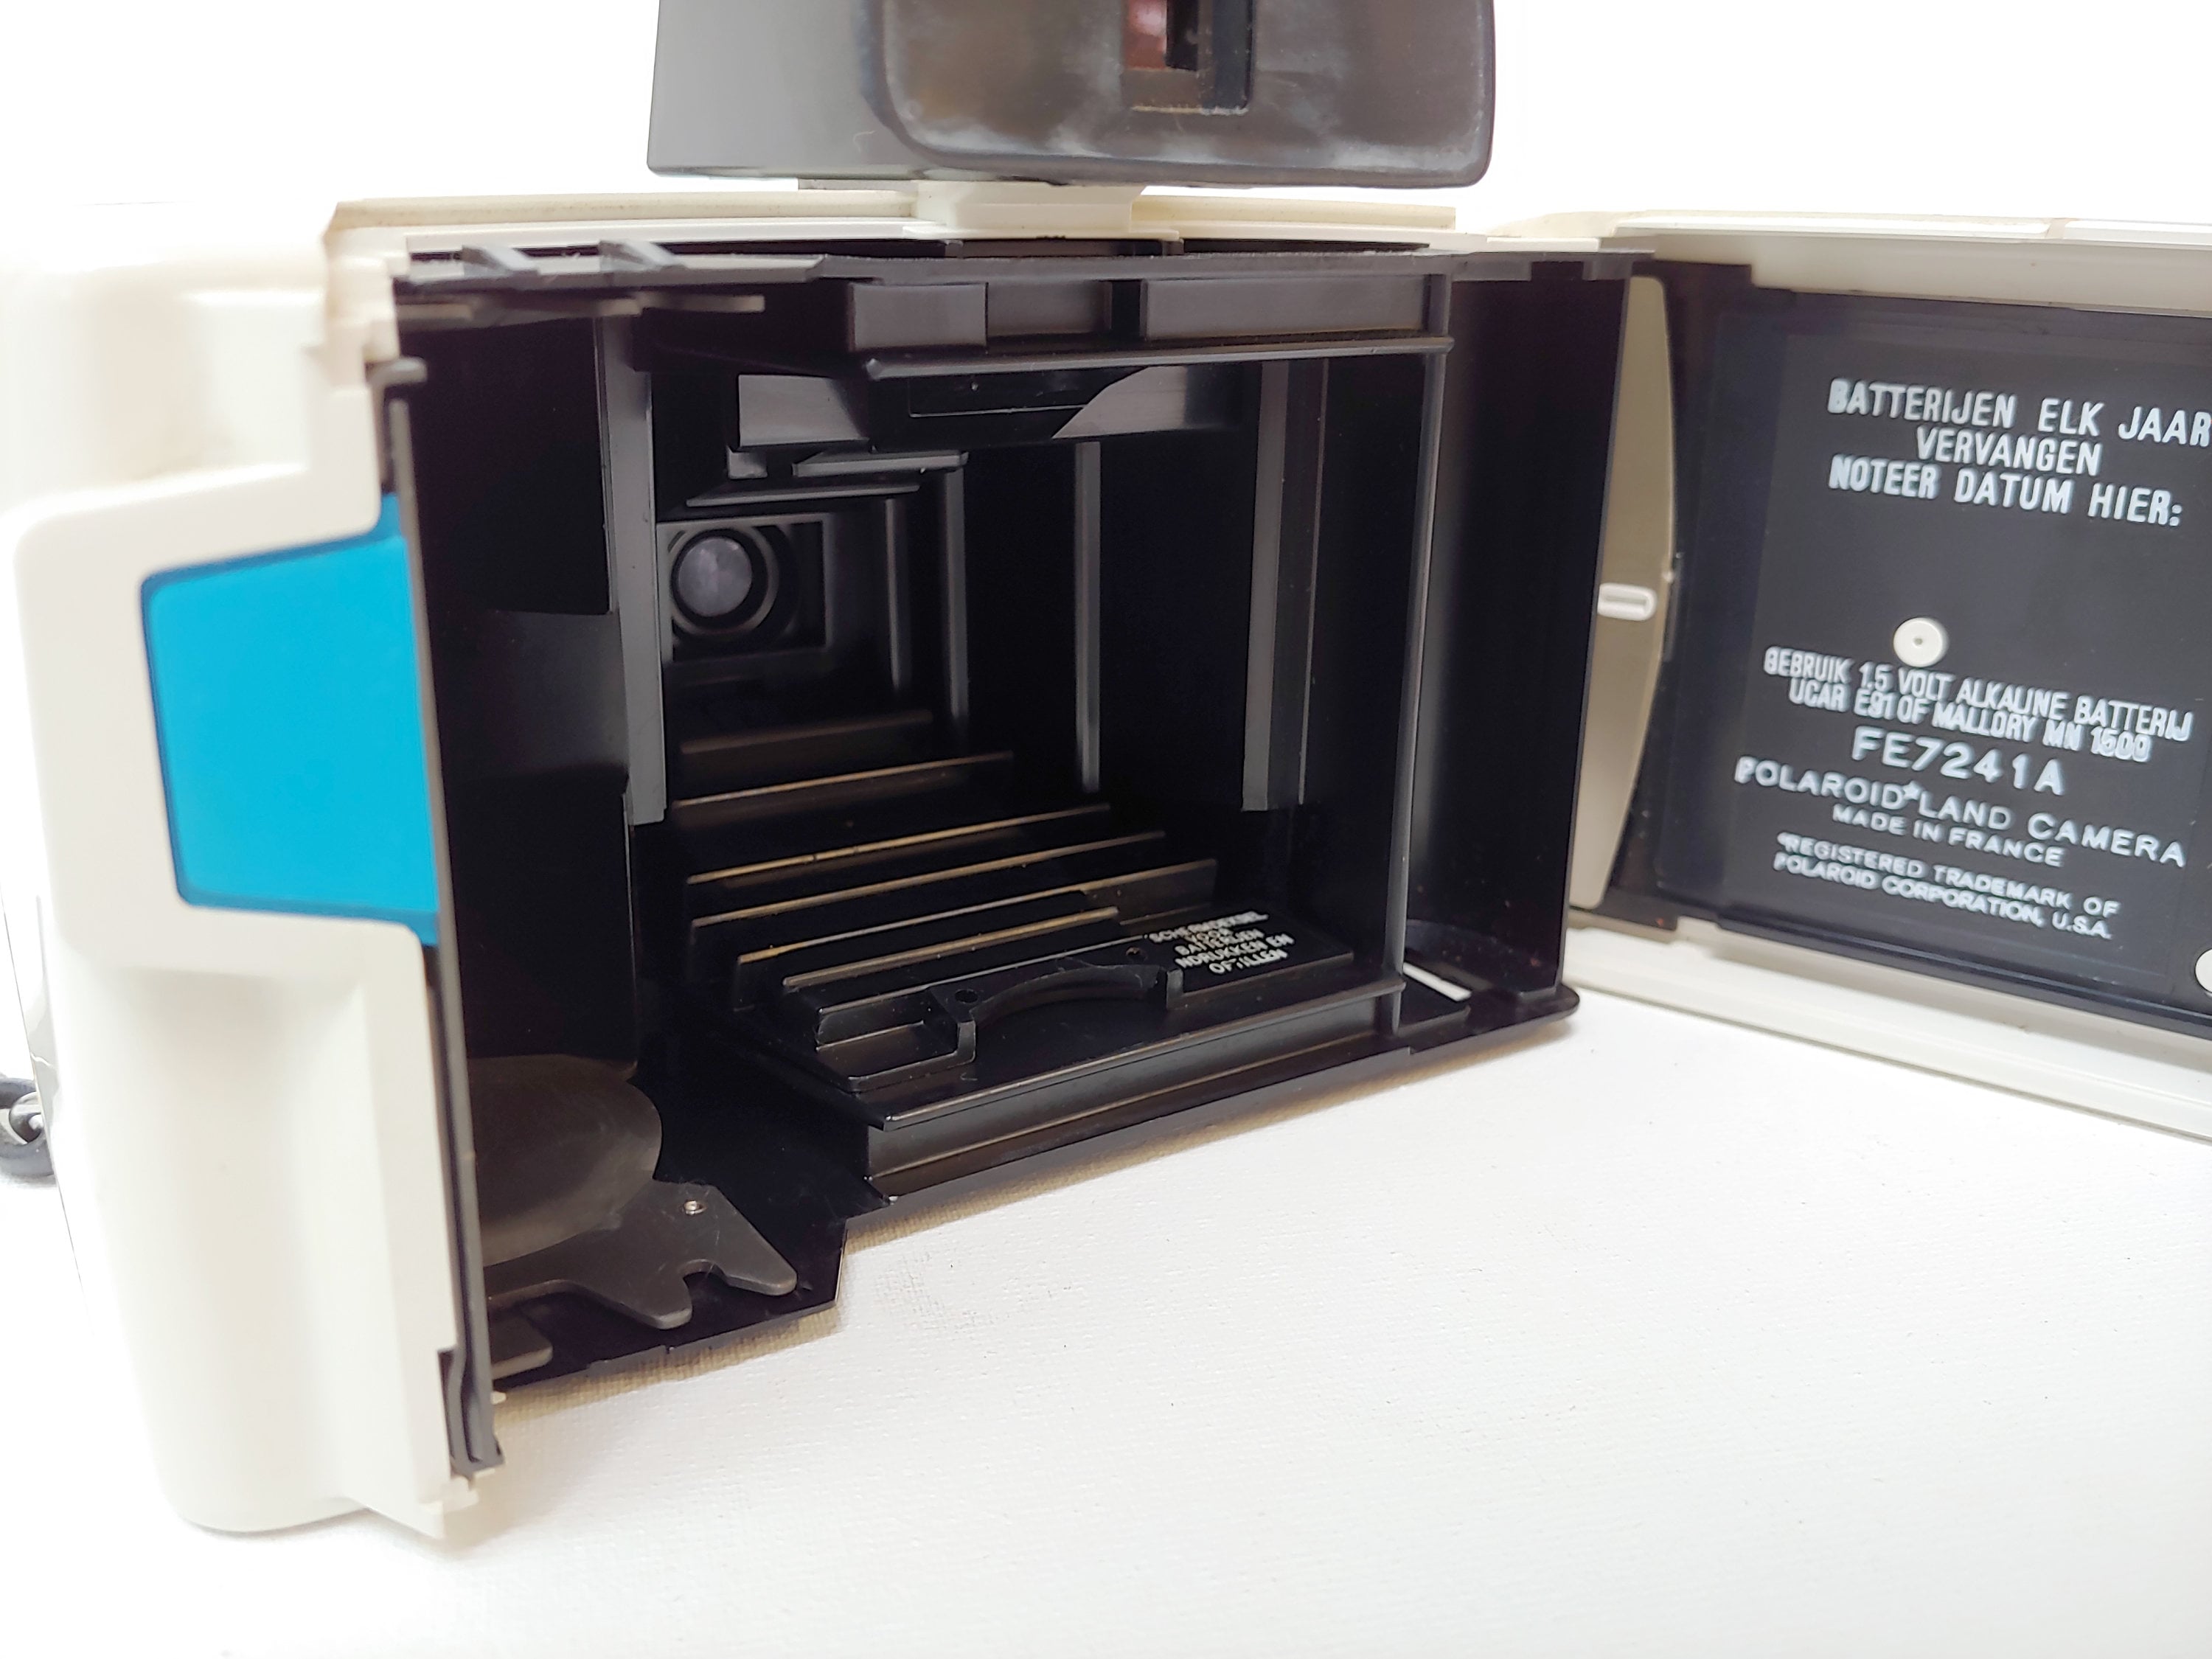 Space Age Design - Polaroid Swinger Model 20 Instant Film Camera